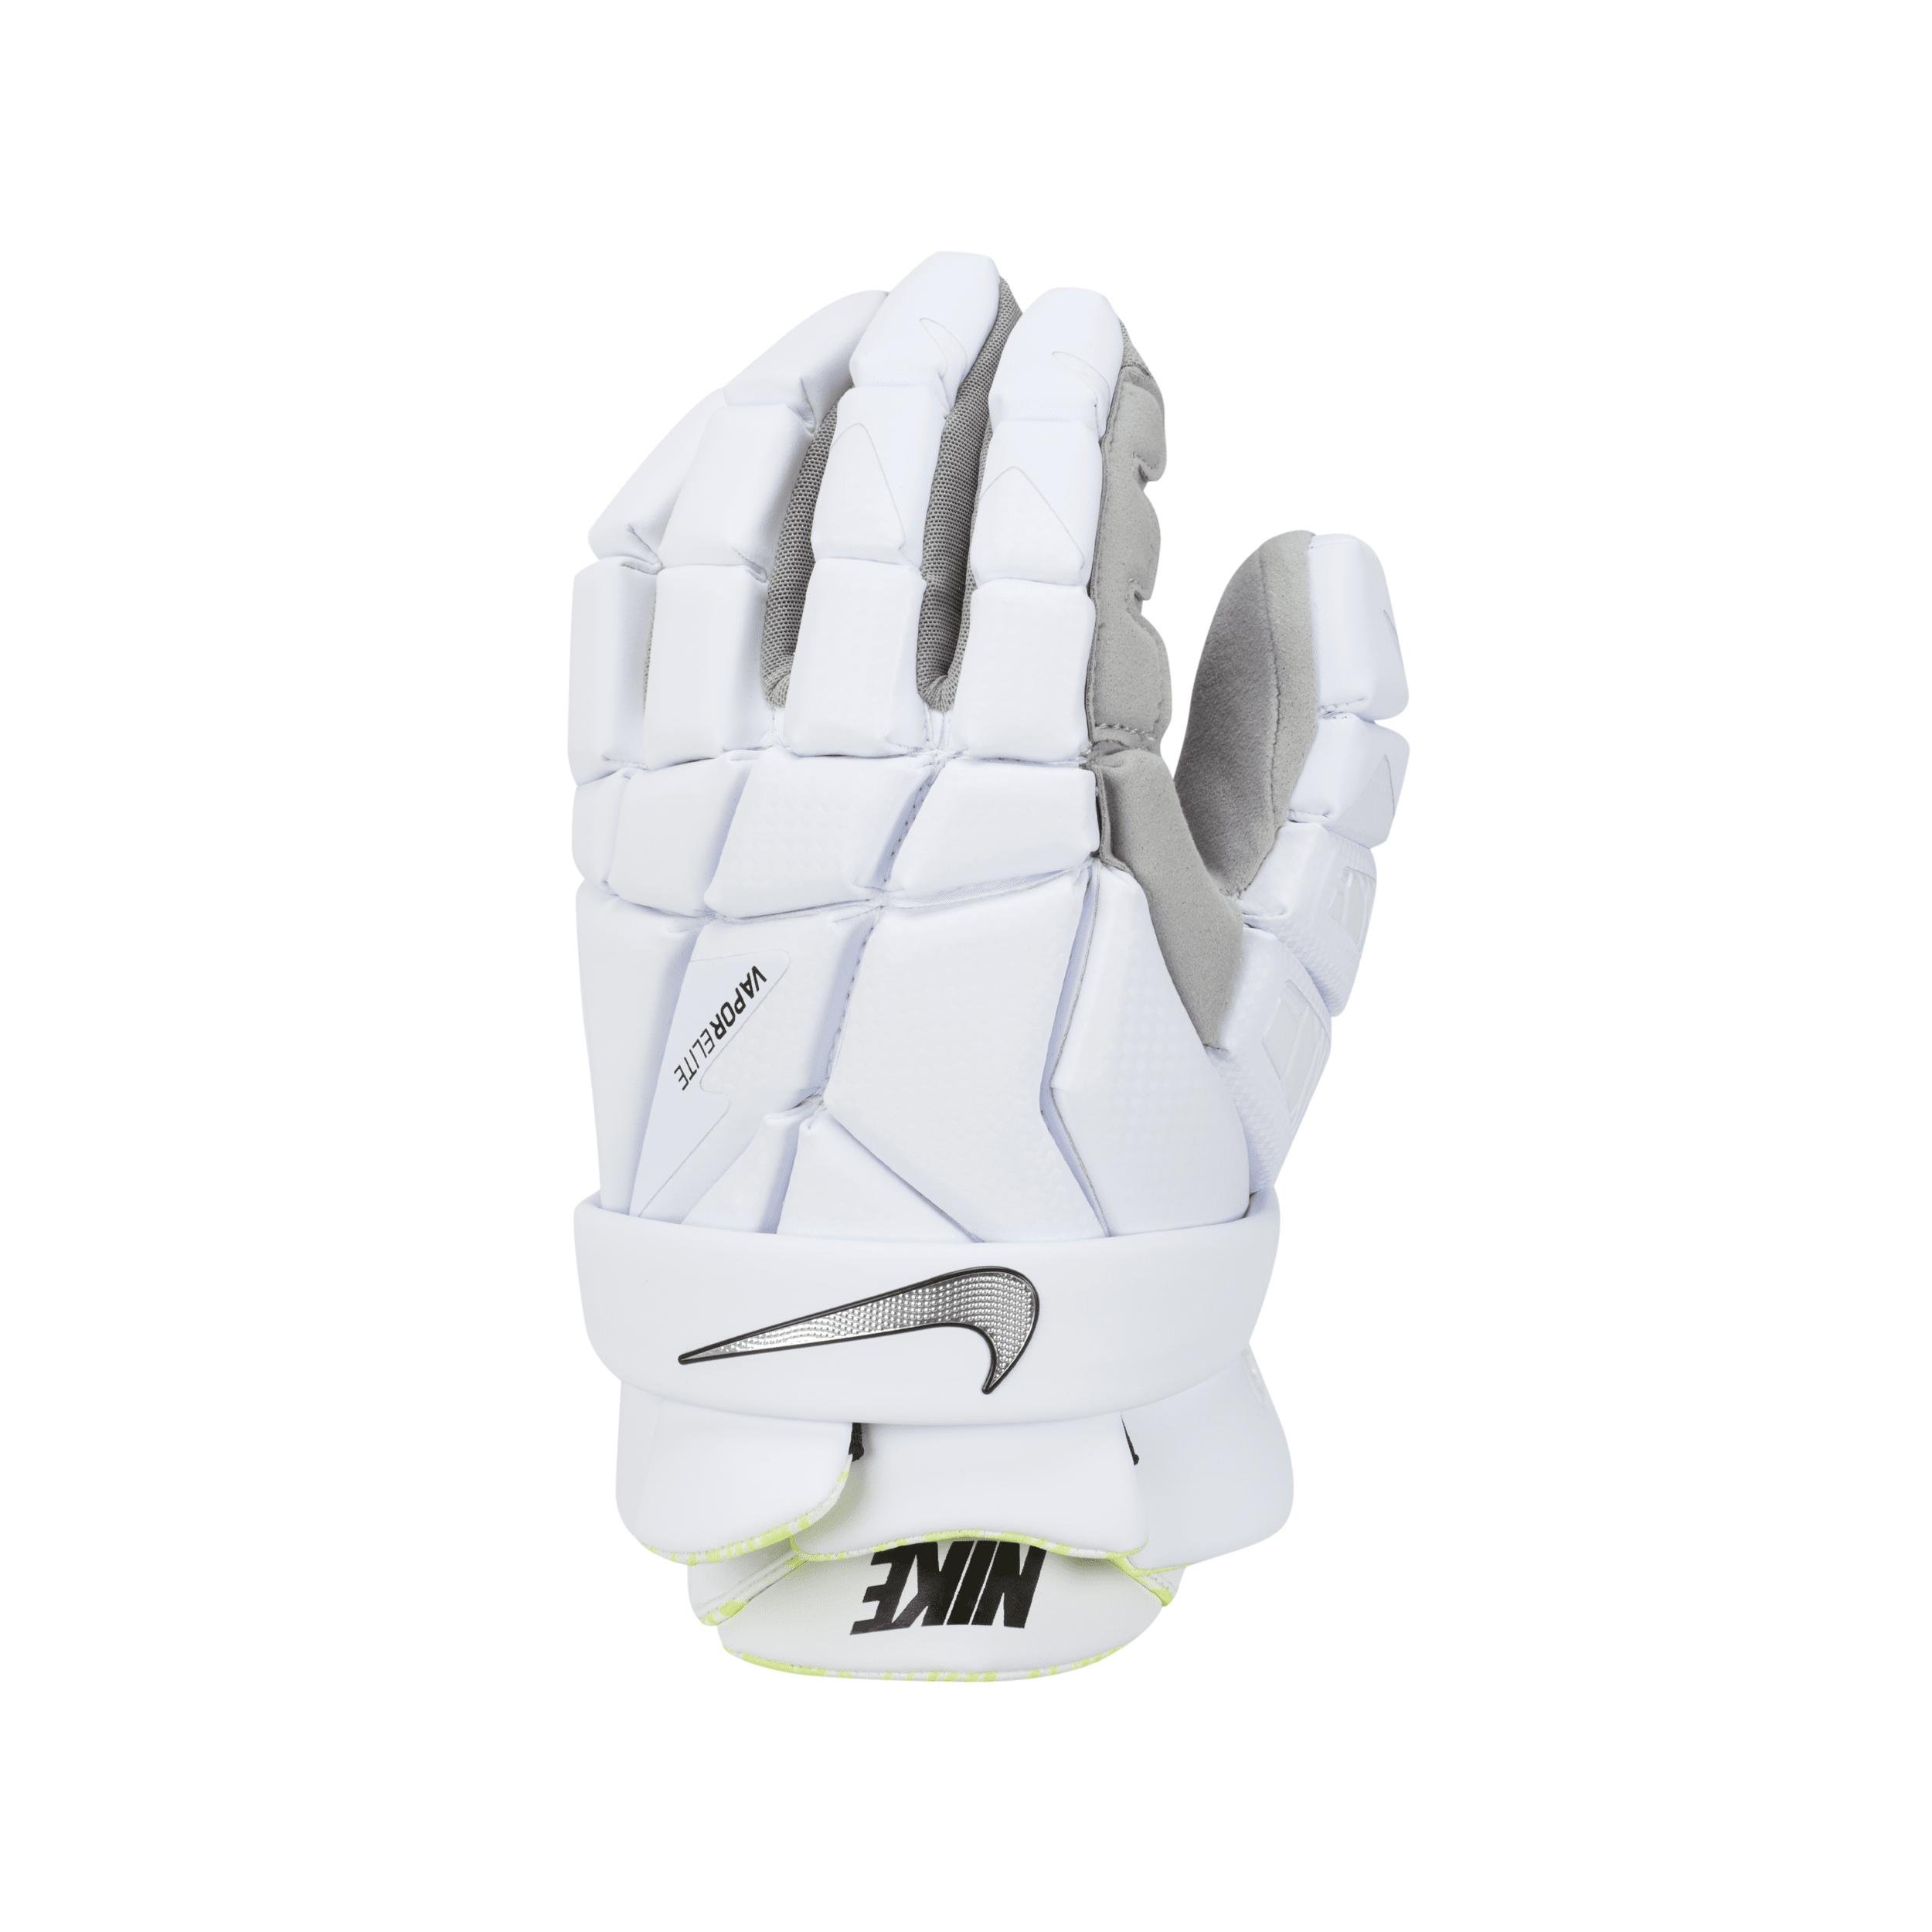 Nike Men's Vapor Elite Lacrosse Gloves by NIKE